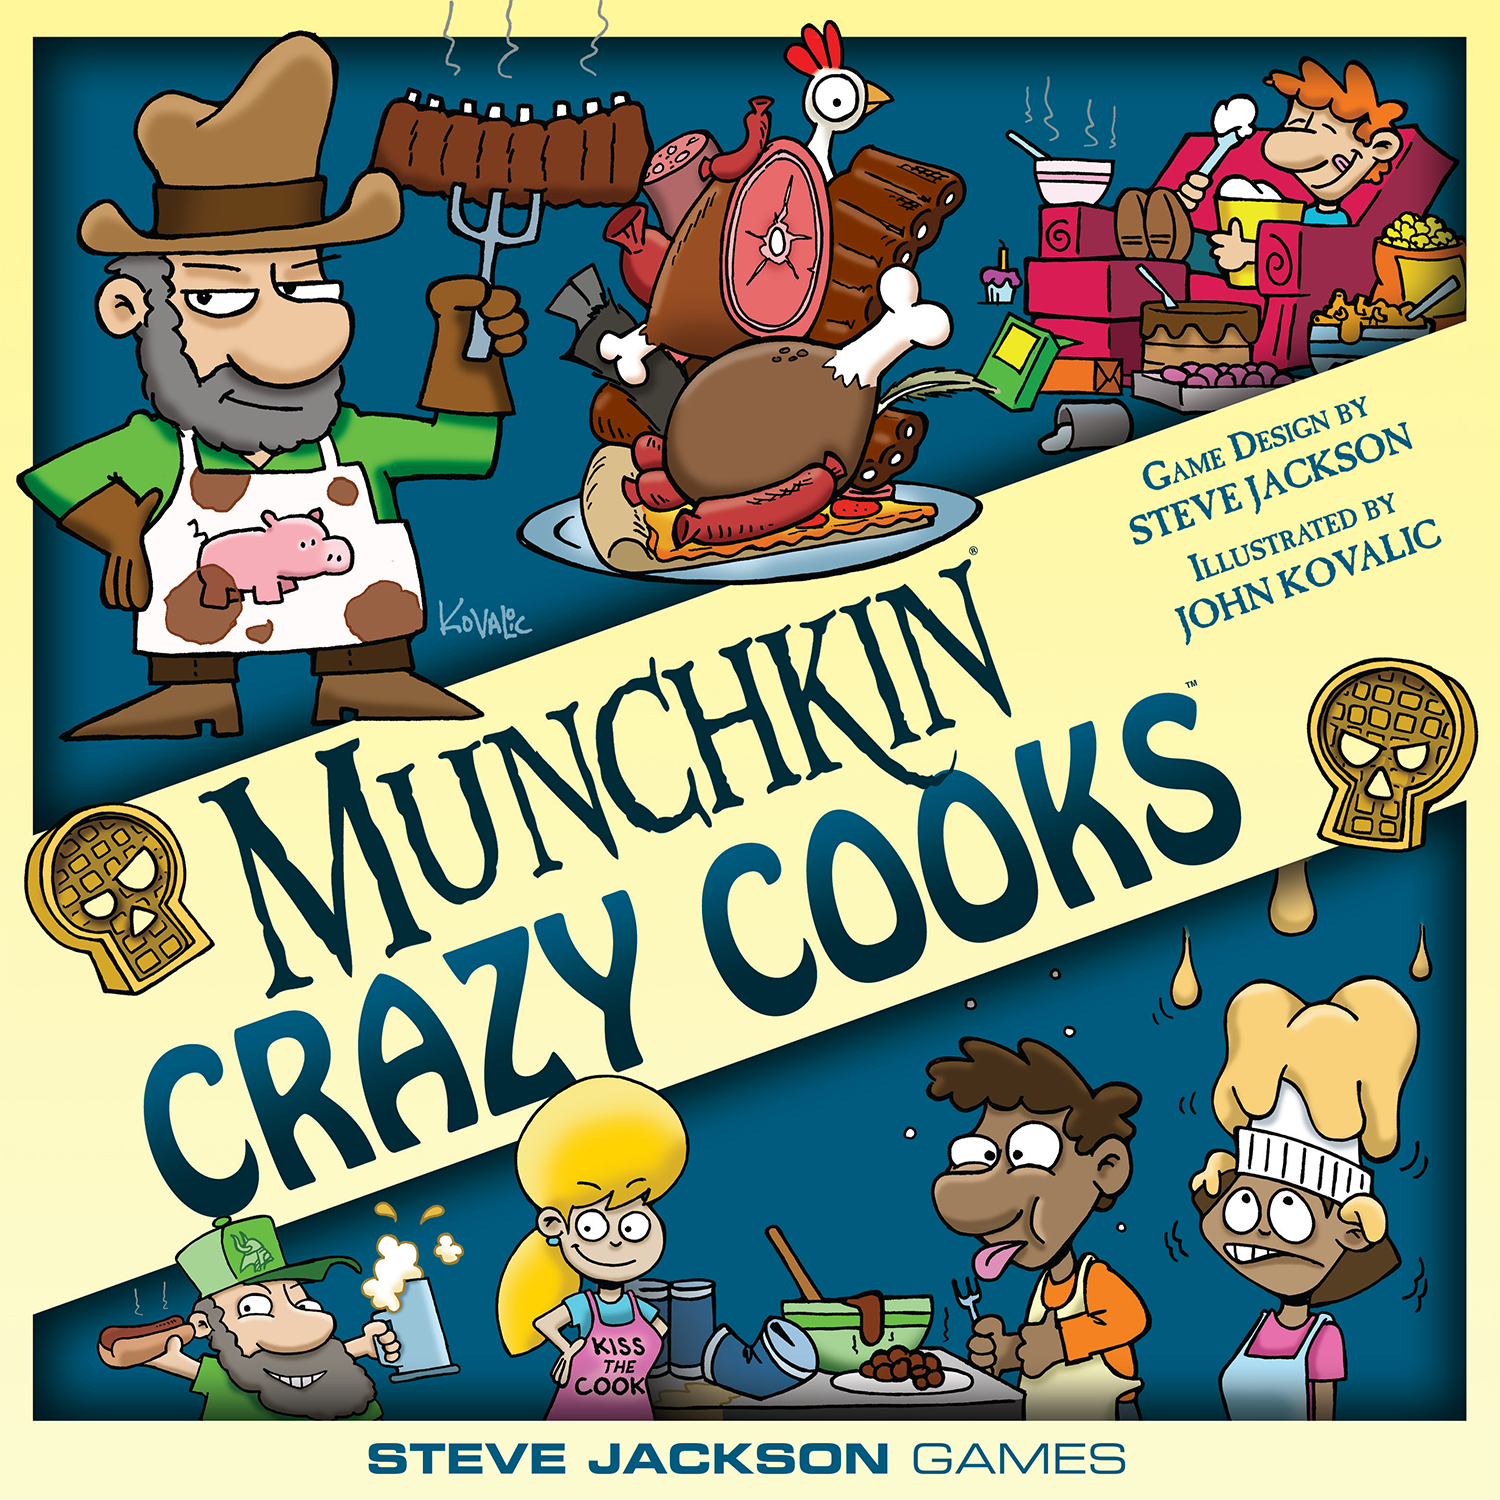 Munchkin Crazy Cooks - Reprint